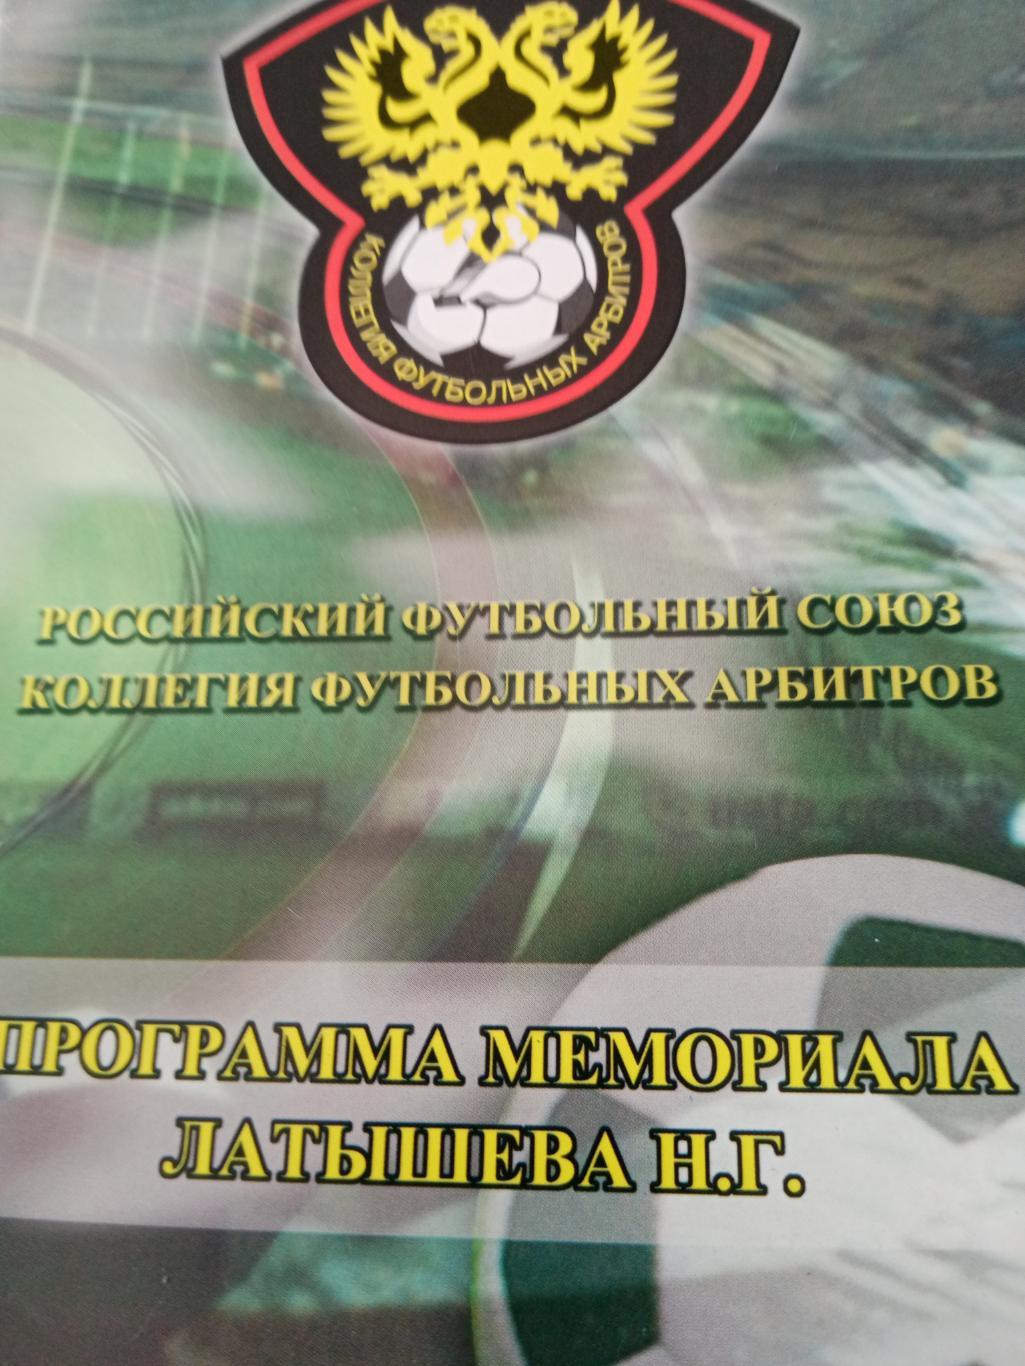 Программа мемориала Н.Г.Латышева, 2003 г